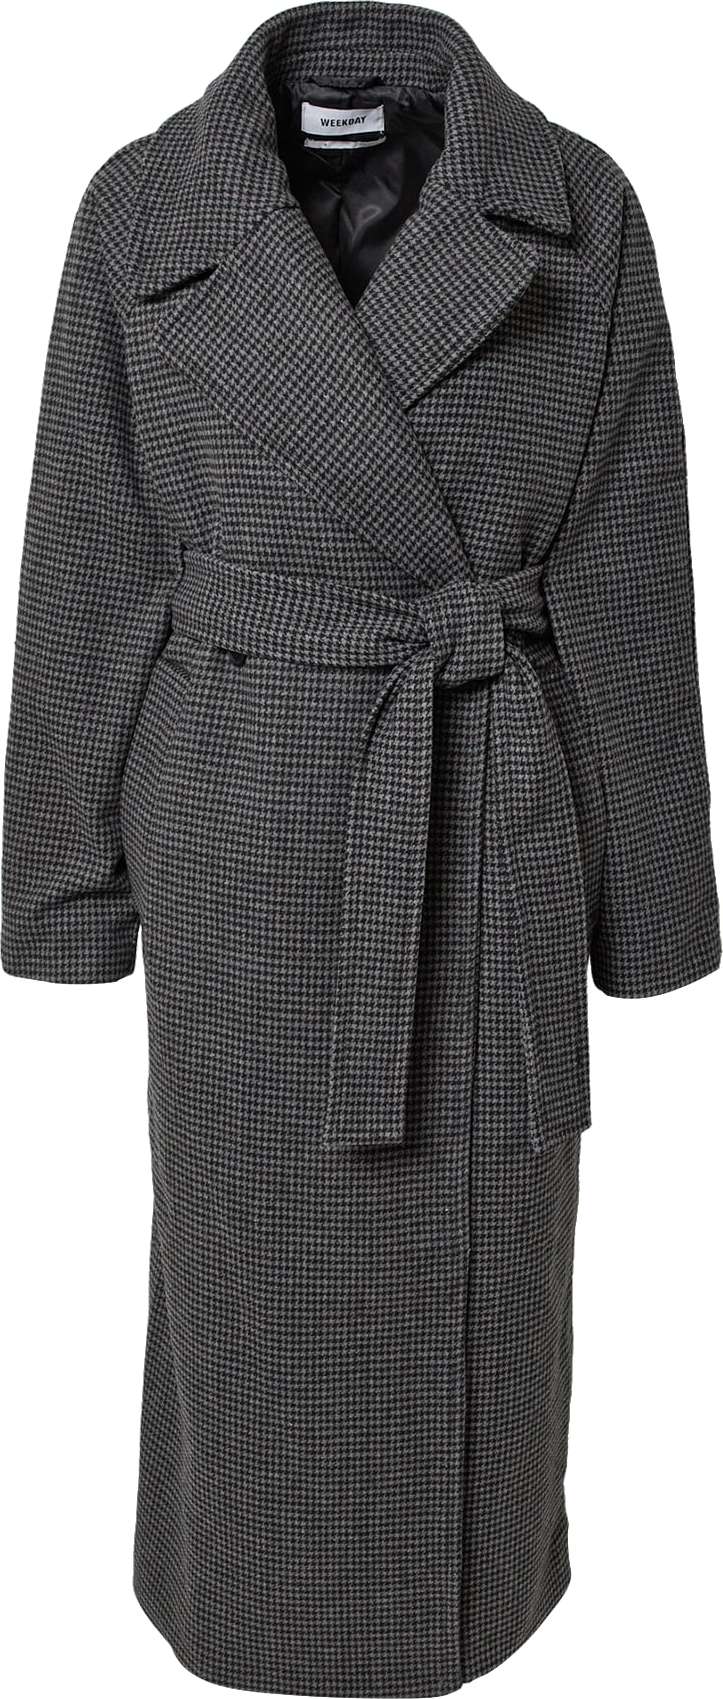 WEEKDAY Přechodný kabát 'Kia' černá / šedý melír